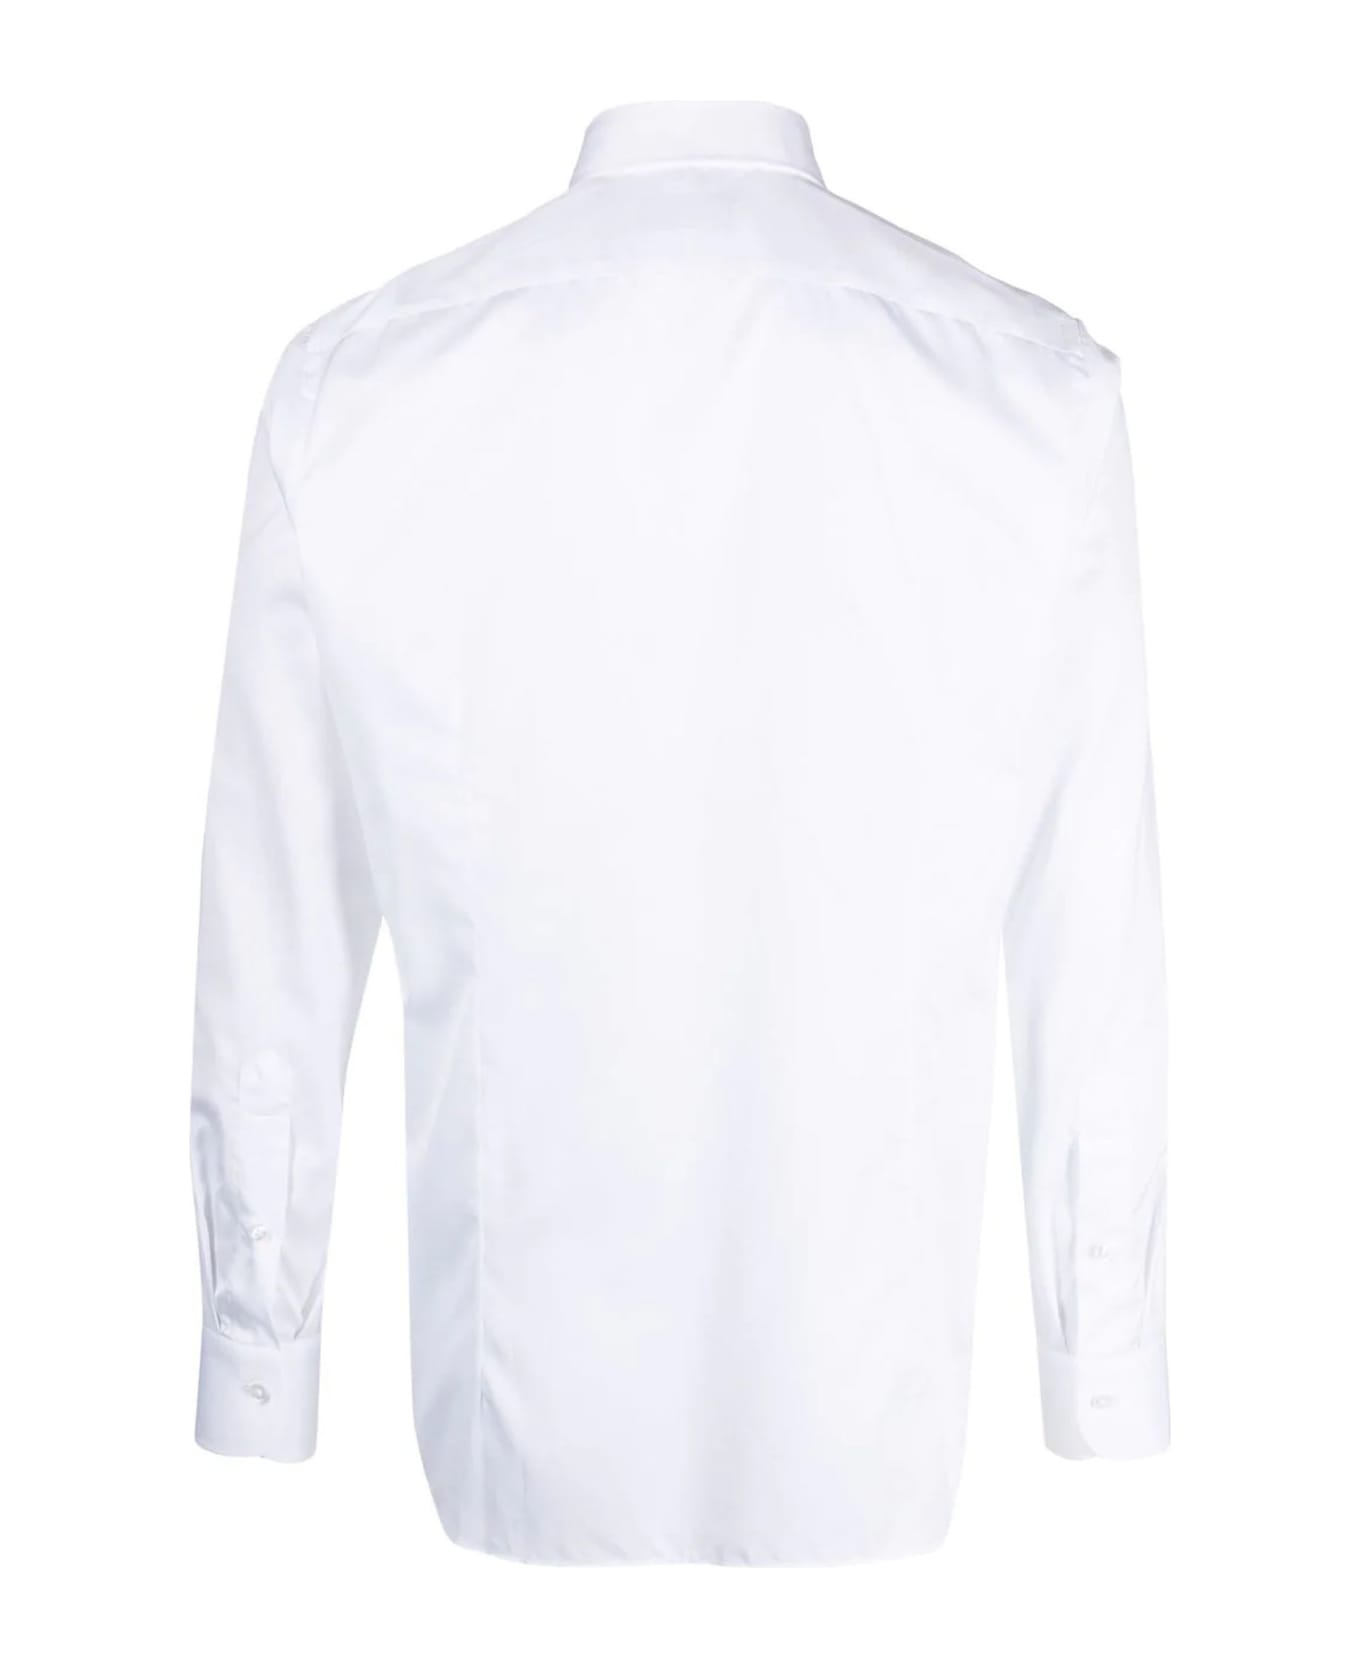 Tagliatore White Cotton Shirts - White